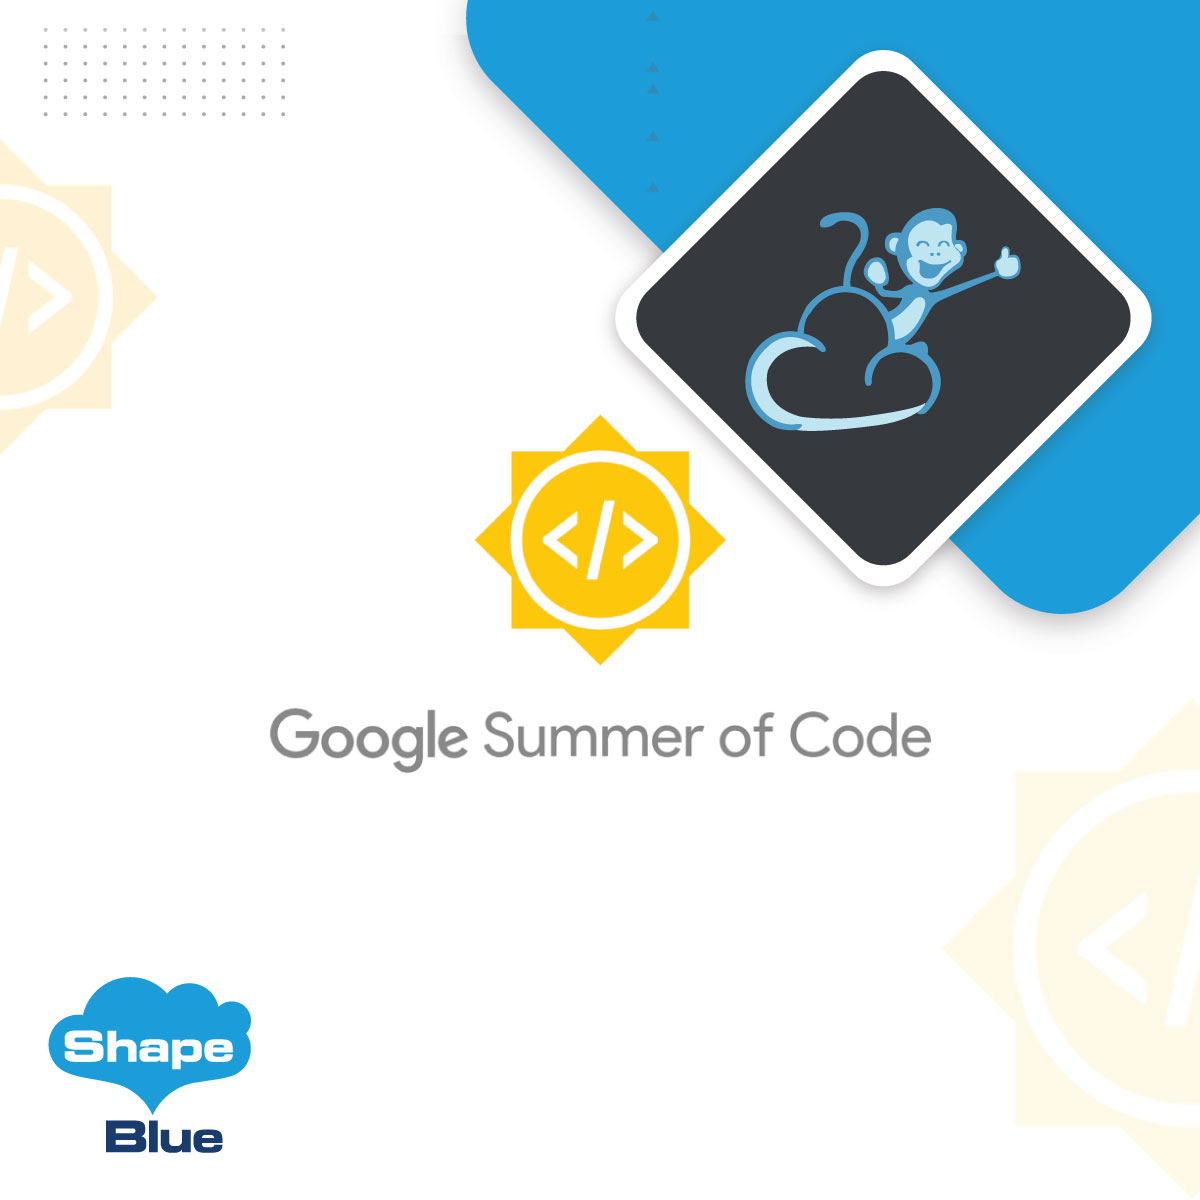 Google Summer of Code ShapeBlue